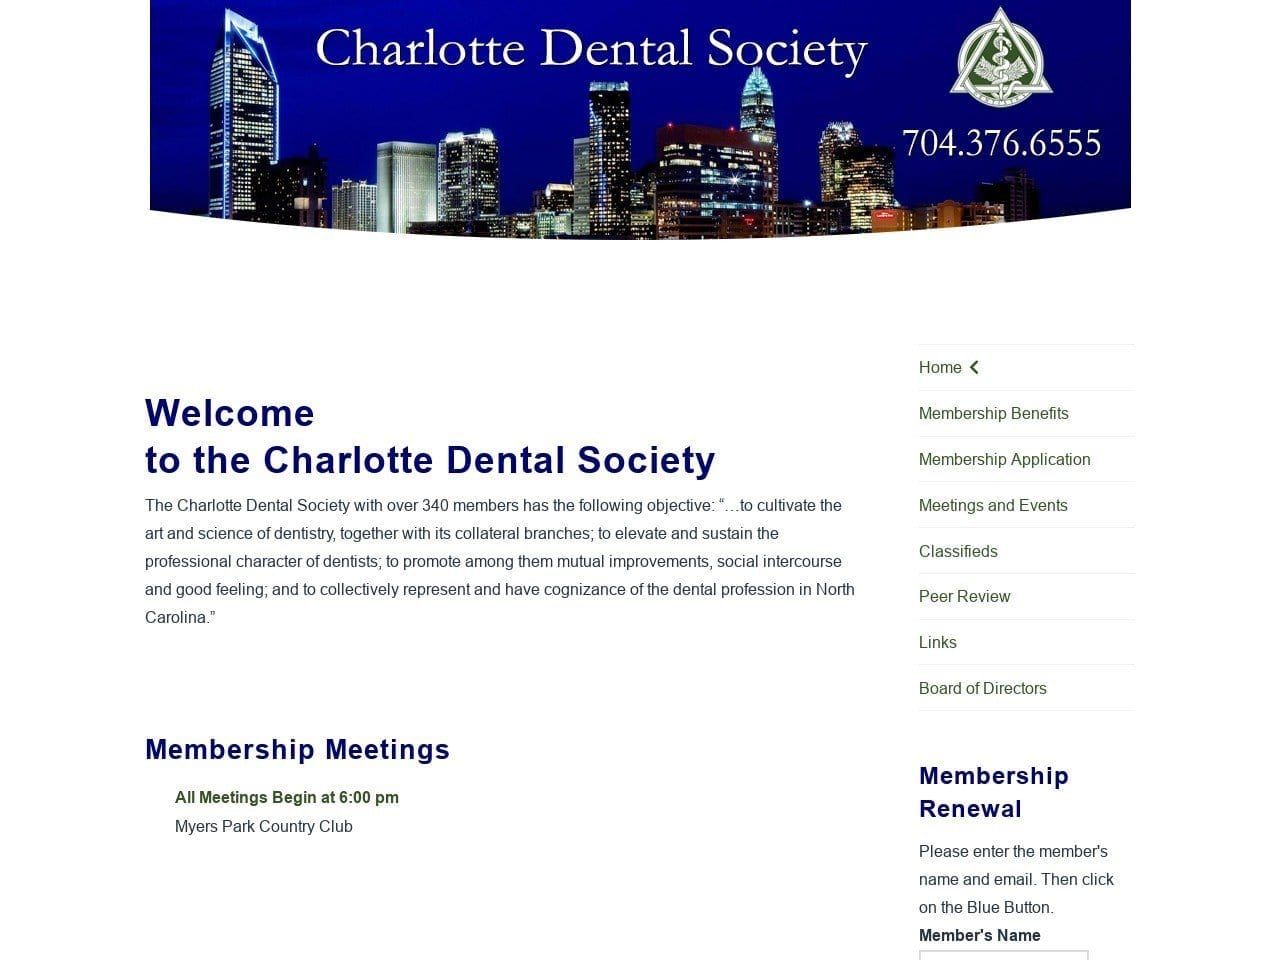 Charlotte Dental Society Website Screenshot from charlottedentalsociety.com